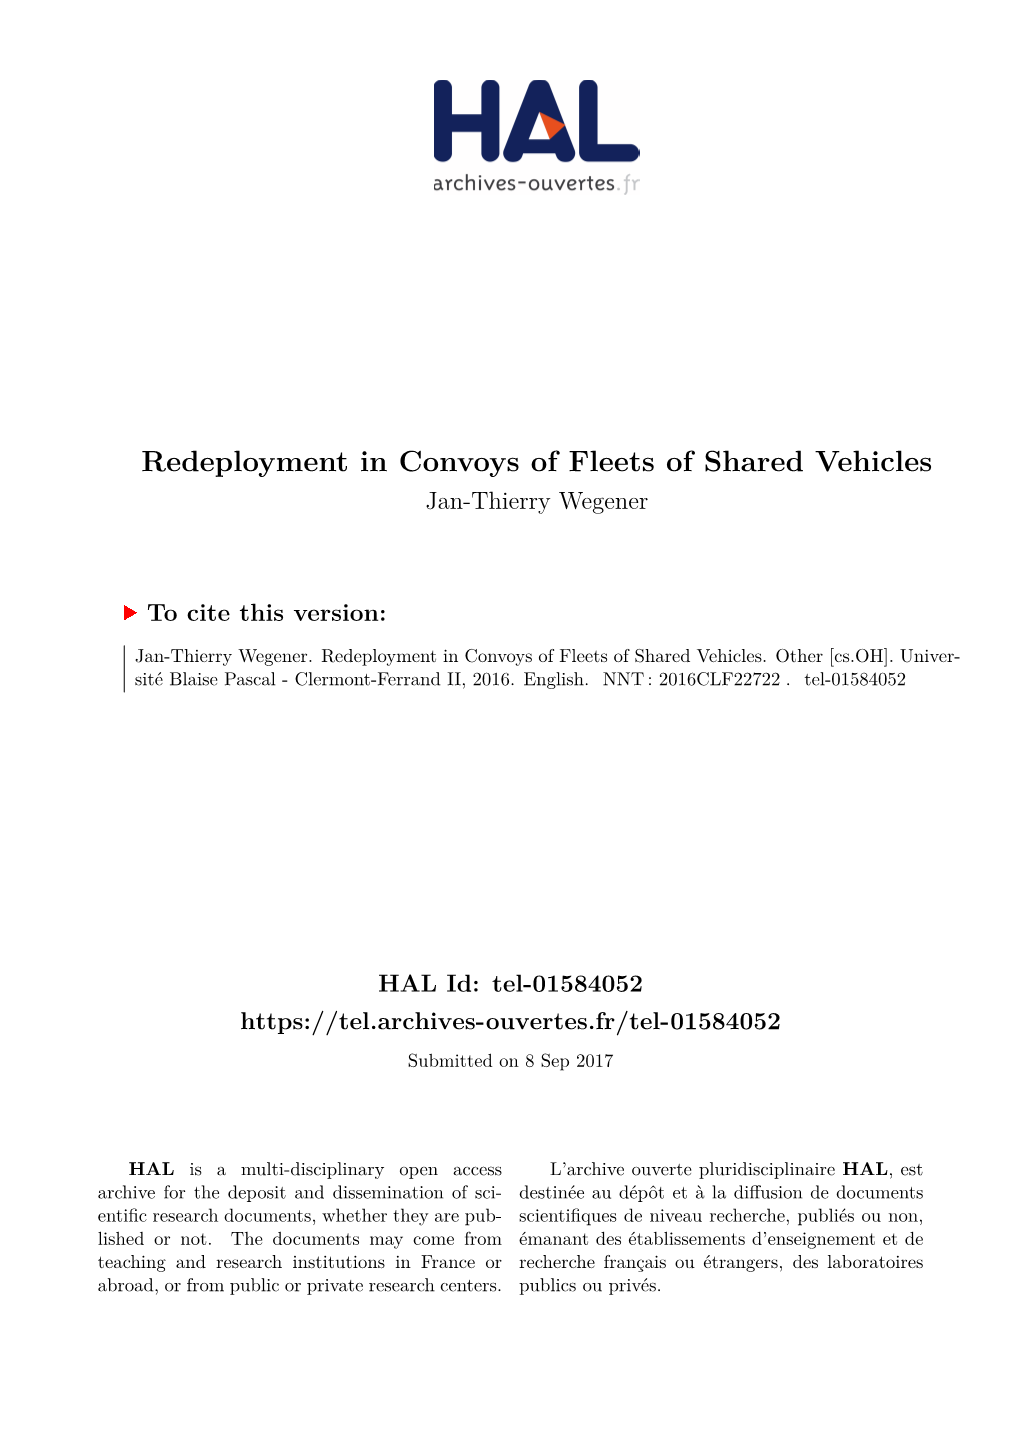 Redeployment in Convoys of Fleets of Shared Vehicles Jan-Thierry Wegener